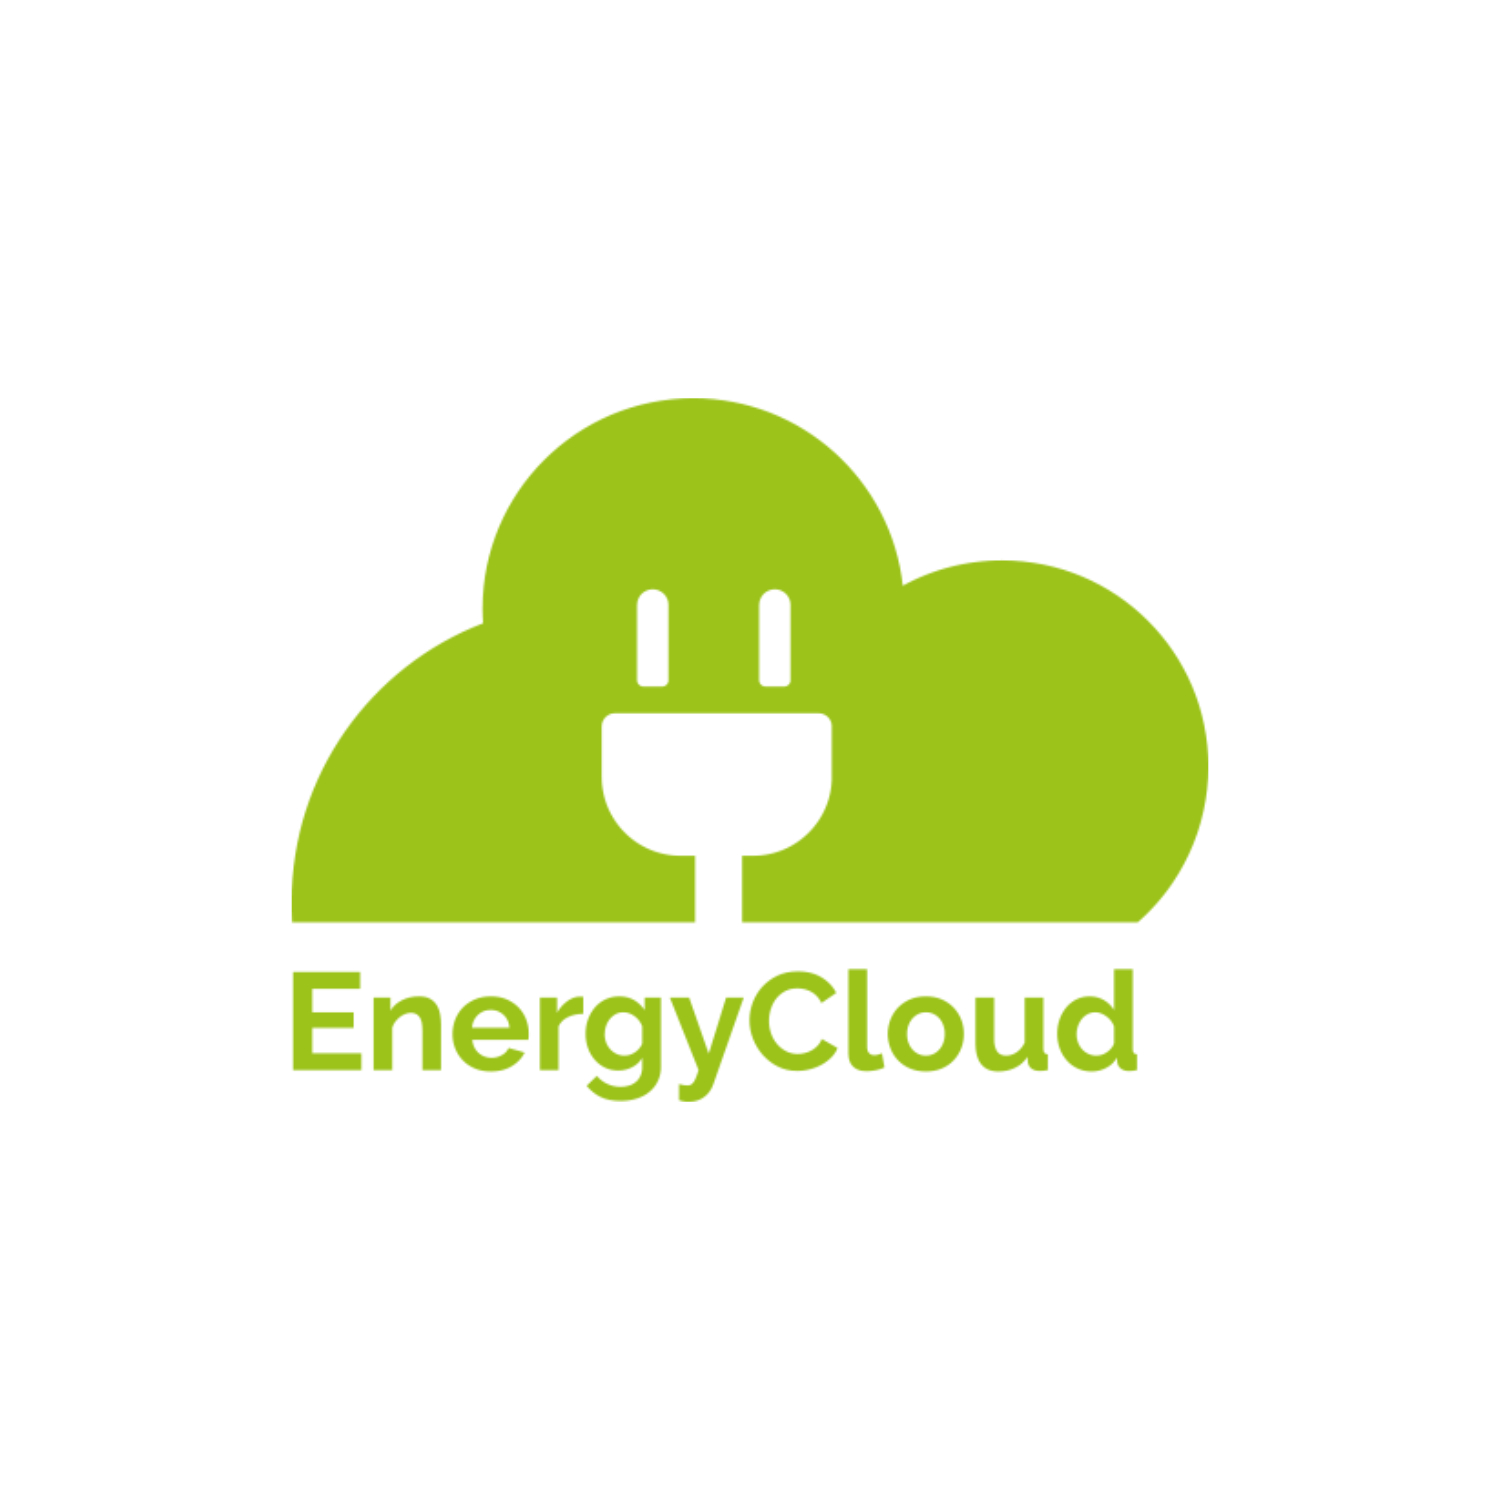 Energy Cloud logo